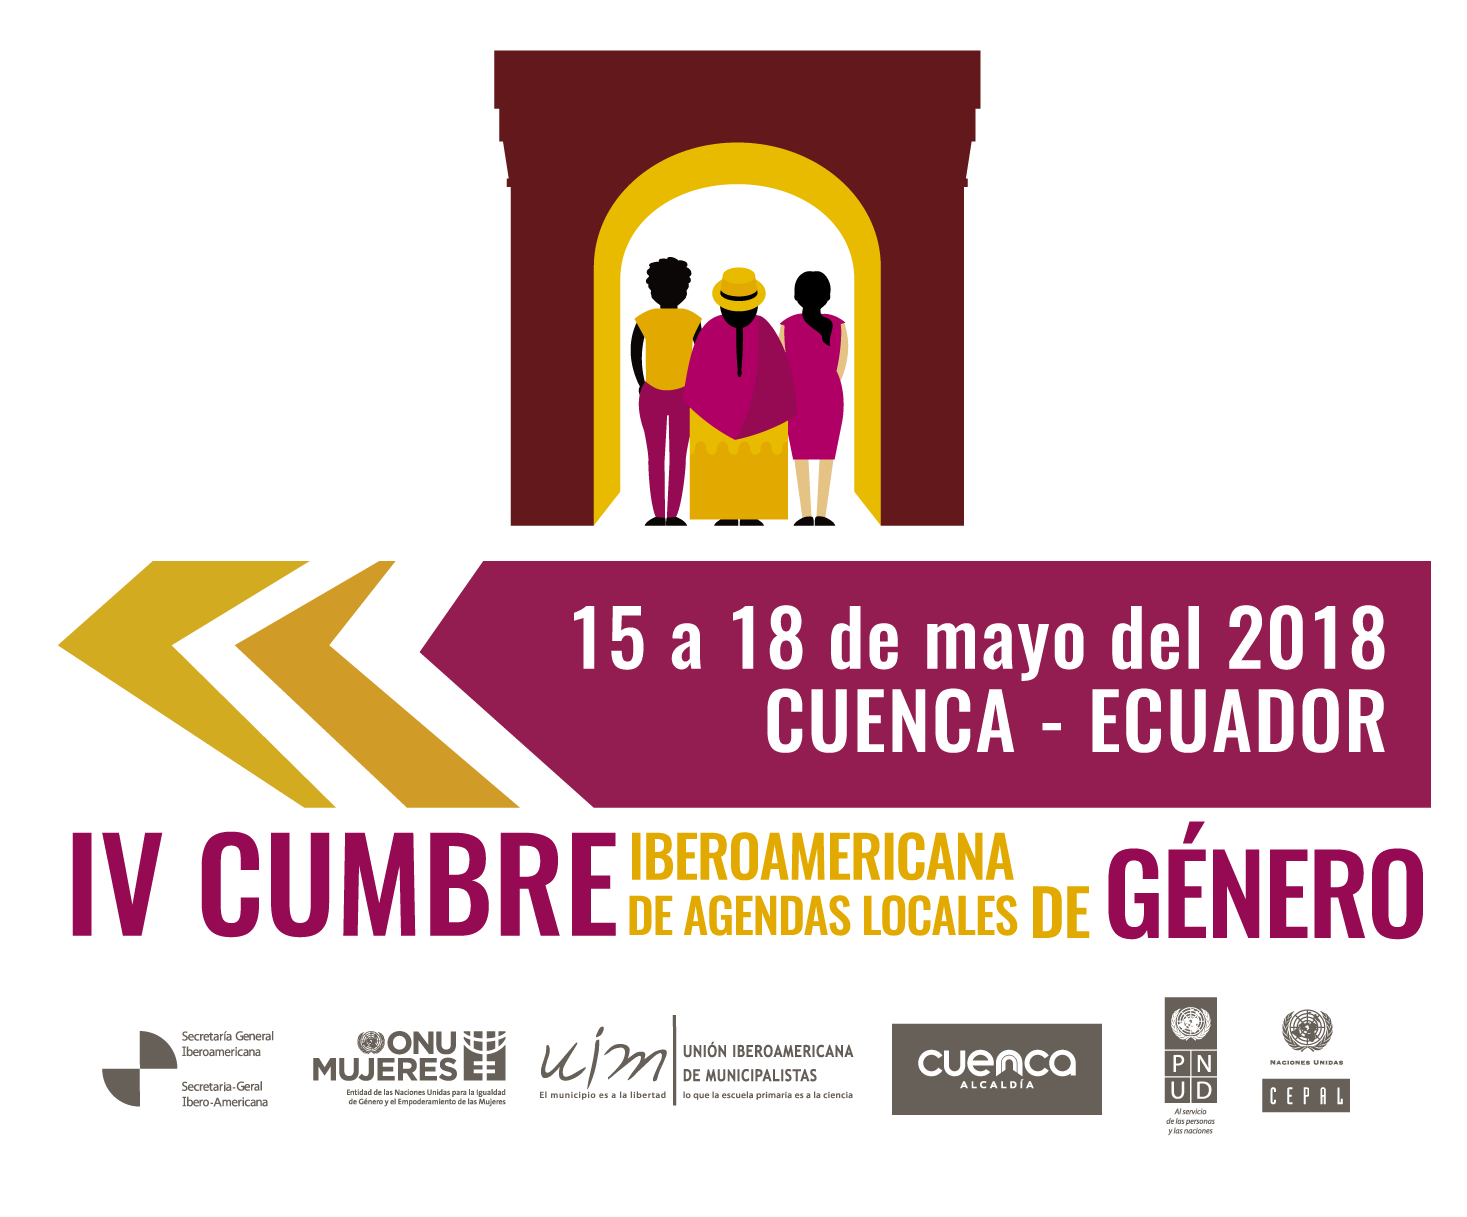 Municipalistas de 23 países se reunirán en la IV Cumbre Iberoamericana de Agendas Locales de Género